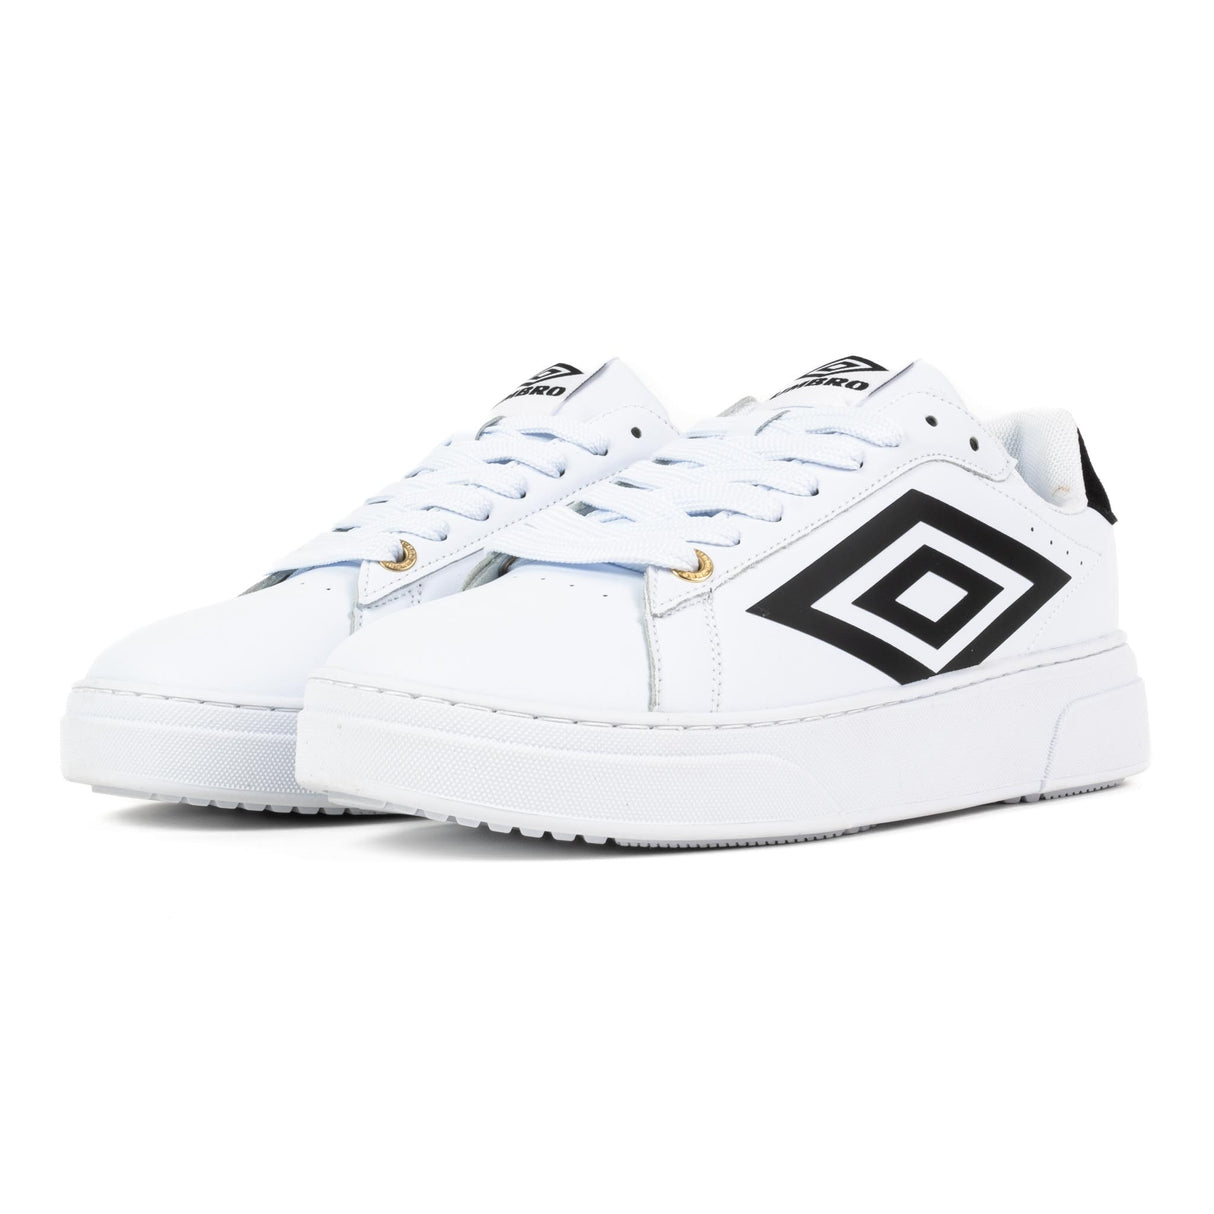 Umbro Sneakers Arrow White/Black 38316